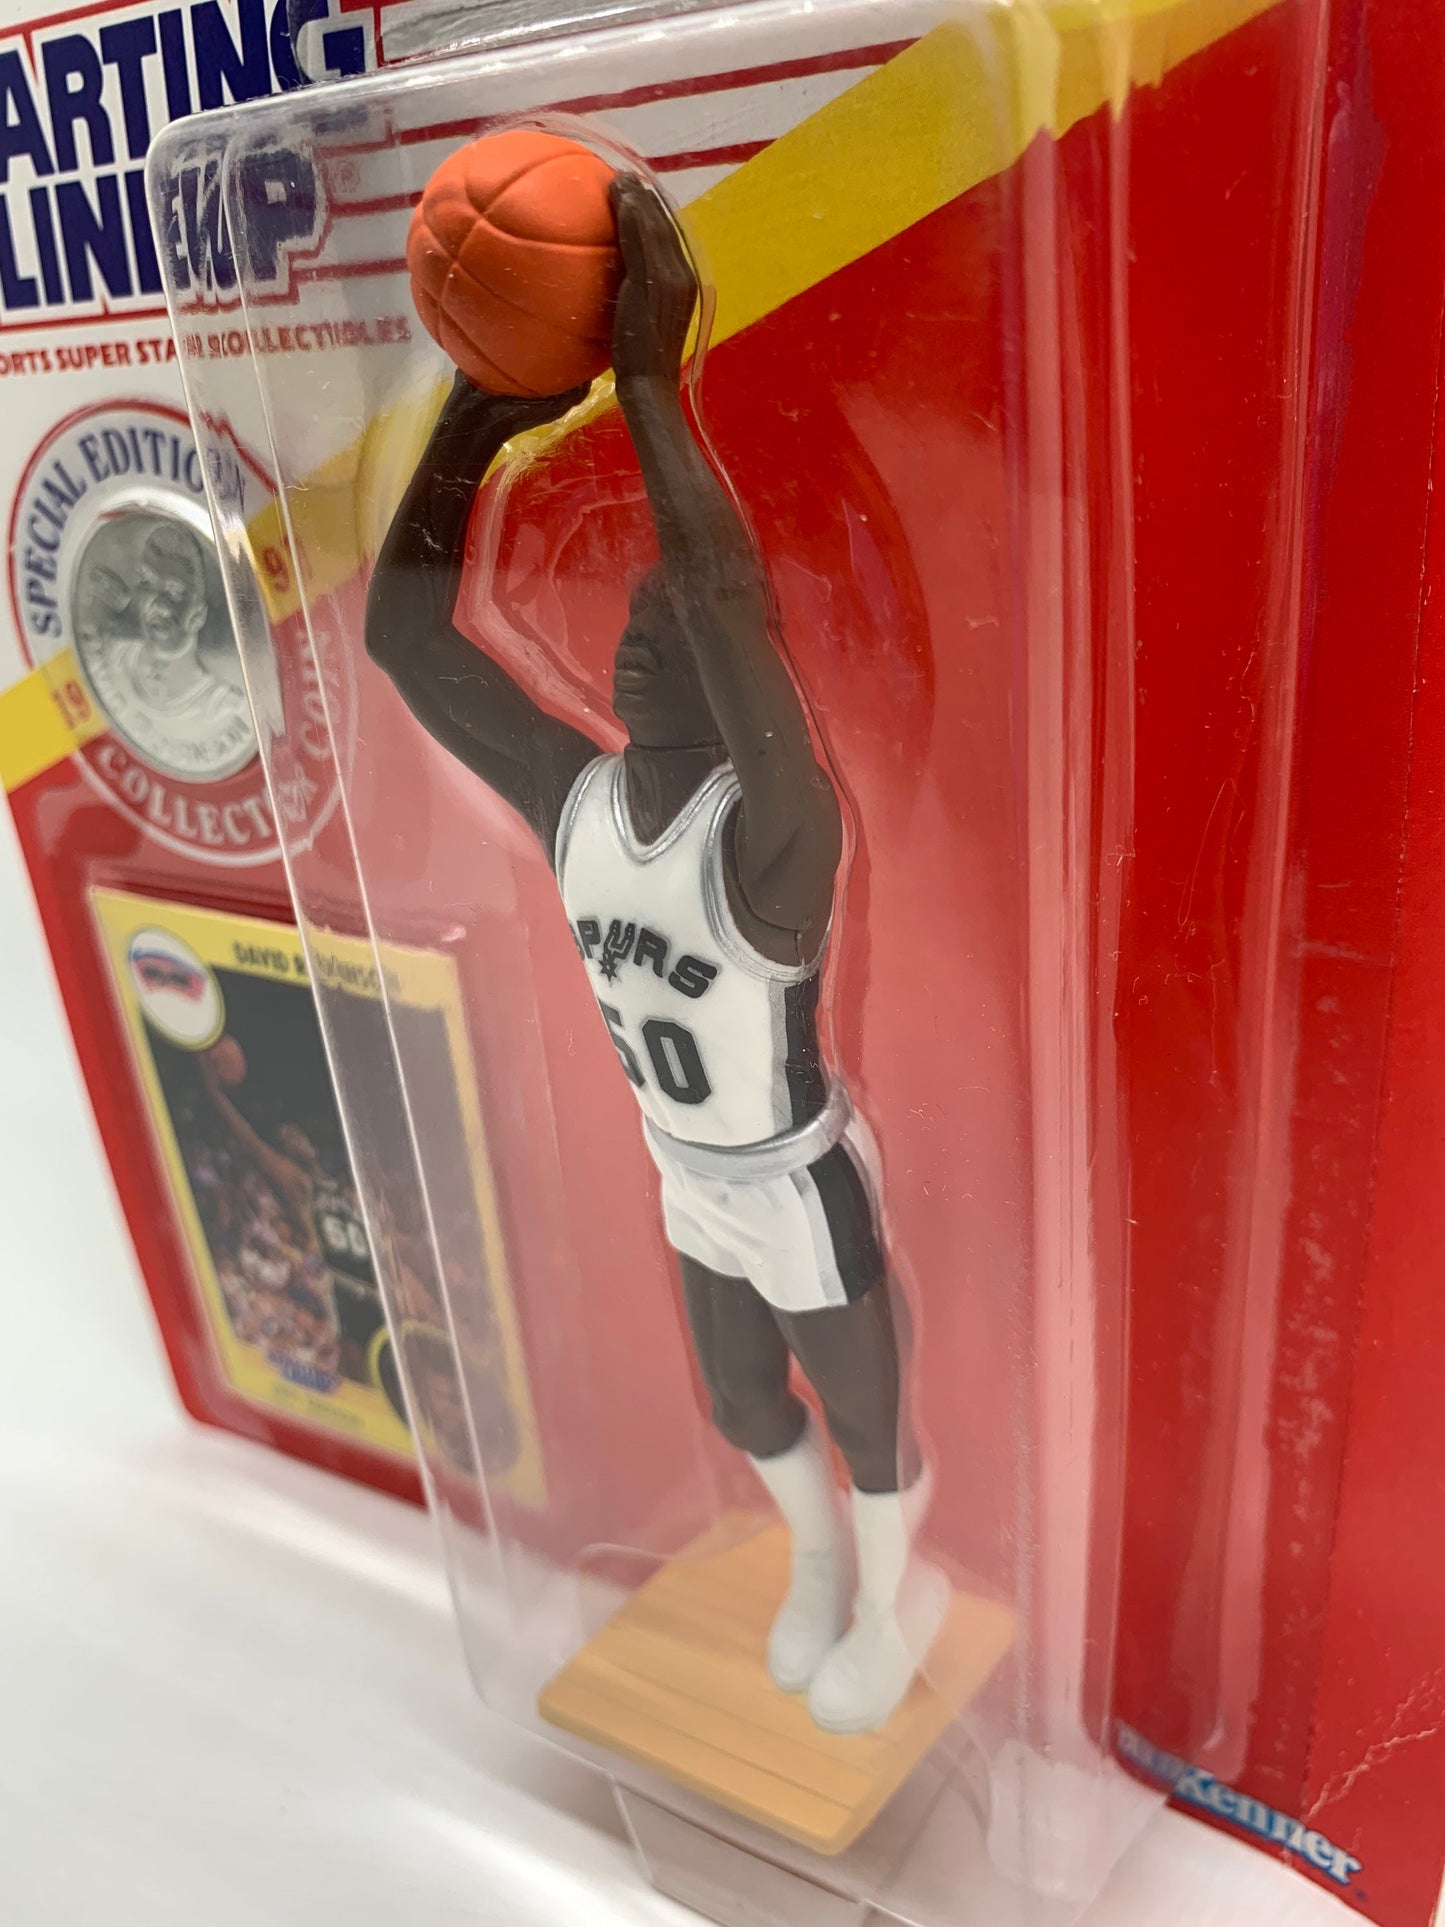 David Robinson San Antonio Spurs White Starting Lineup Collectable NBA Action Figure Perfect Birthday Gift Spurs Man Cave Basketball Decor